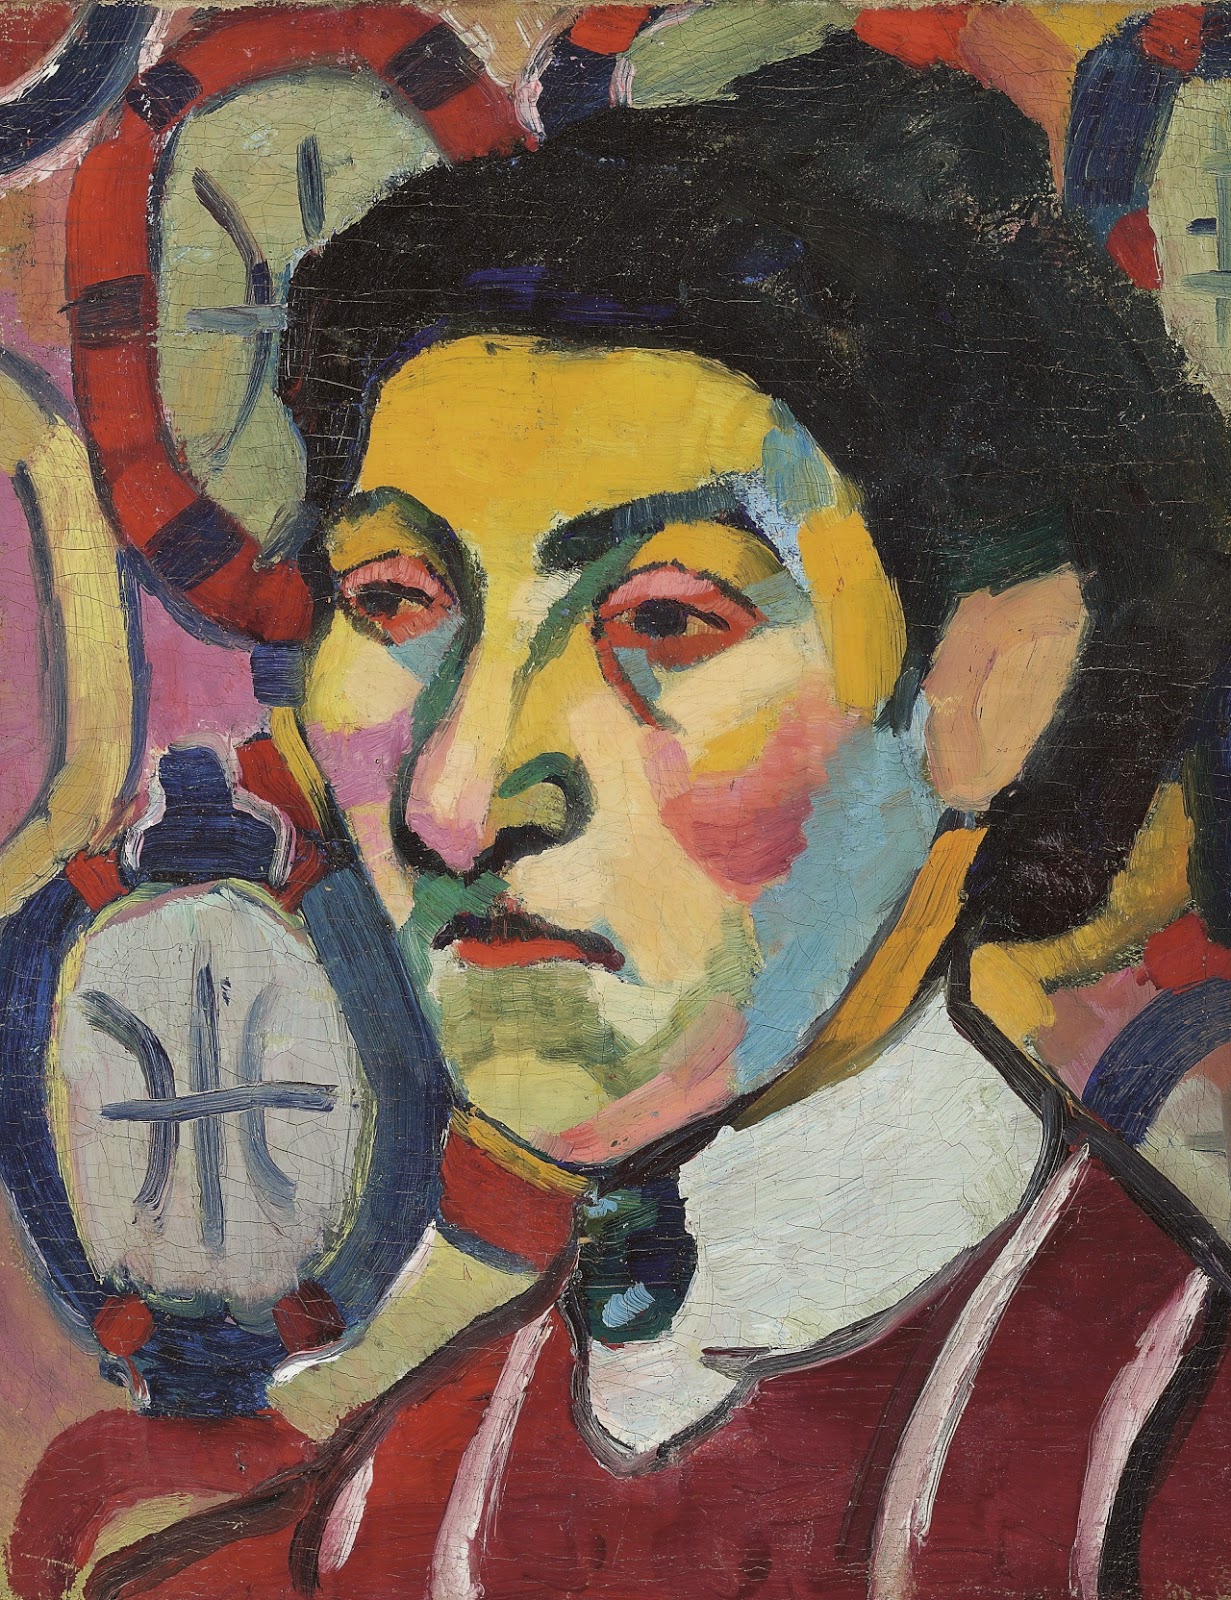 Sonia Delaunay - 14 novembre 1885 - 5 dicembre 1979